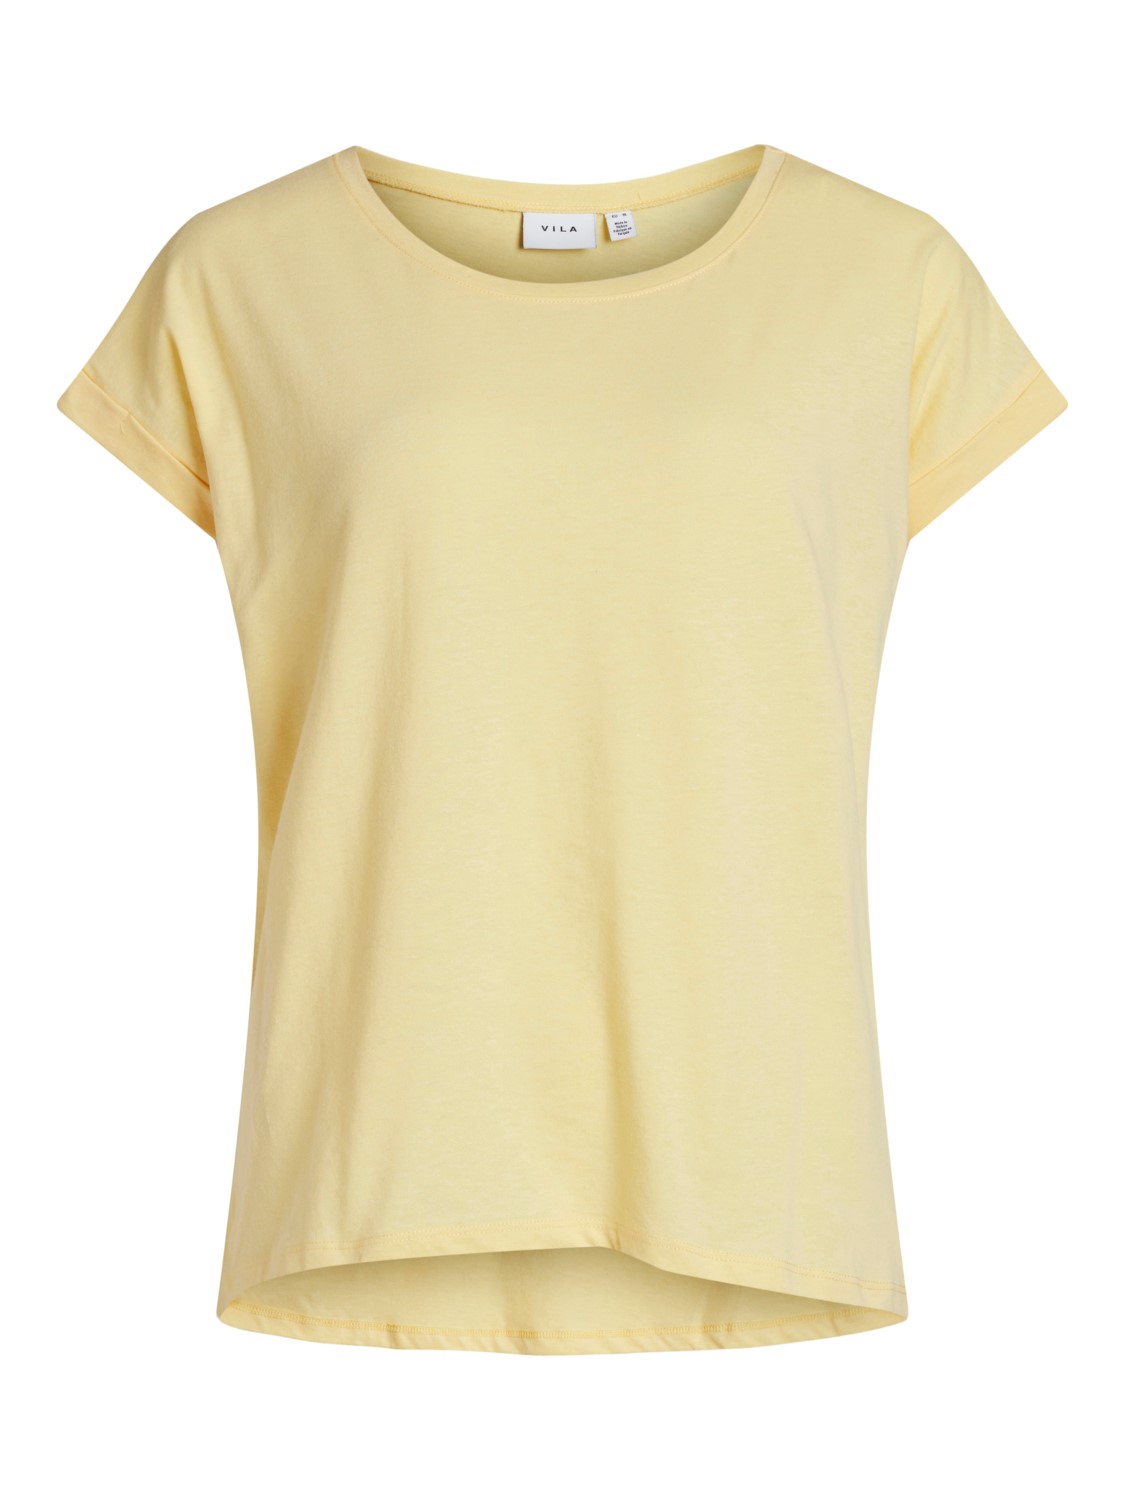 Vila Dreamers T-shirt, lys gul